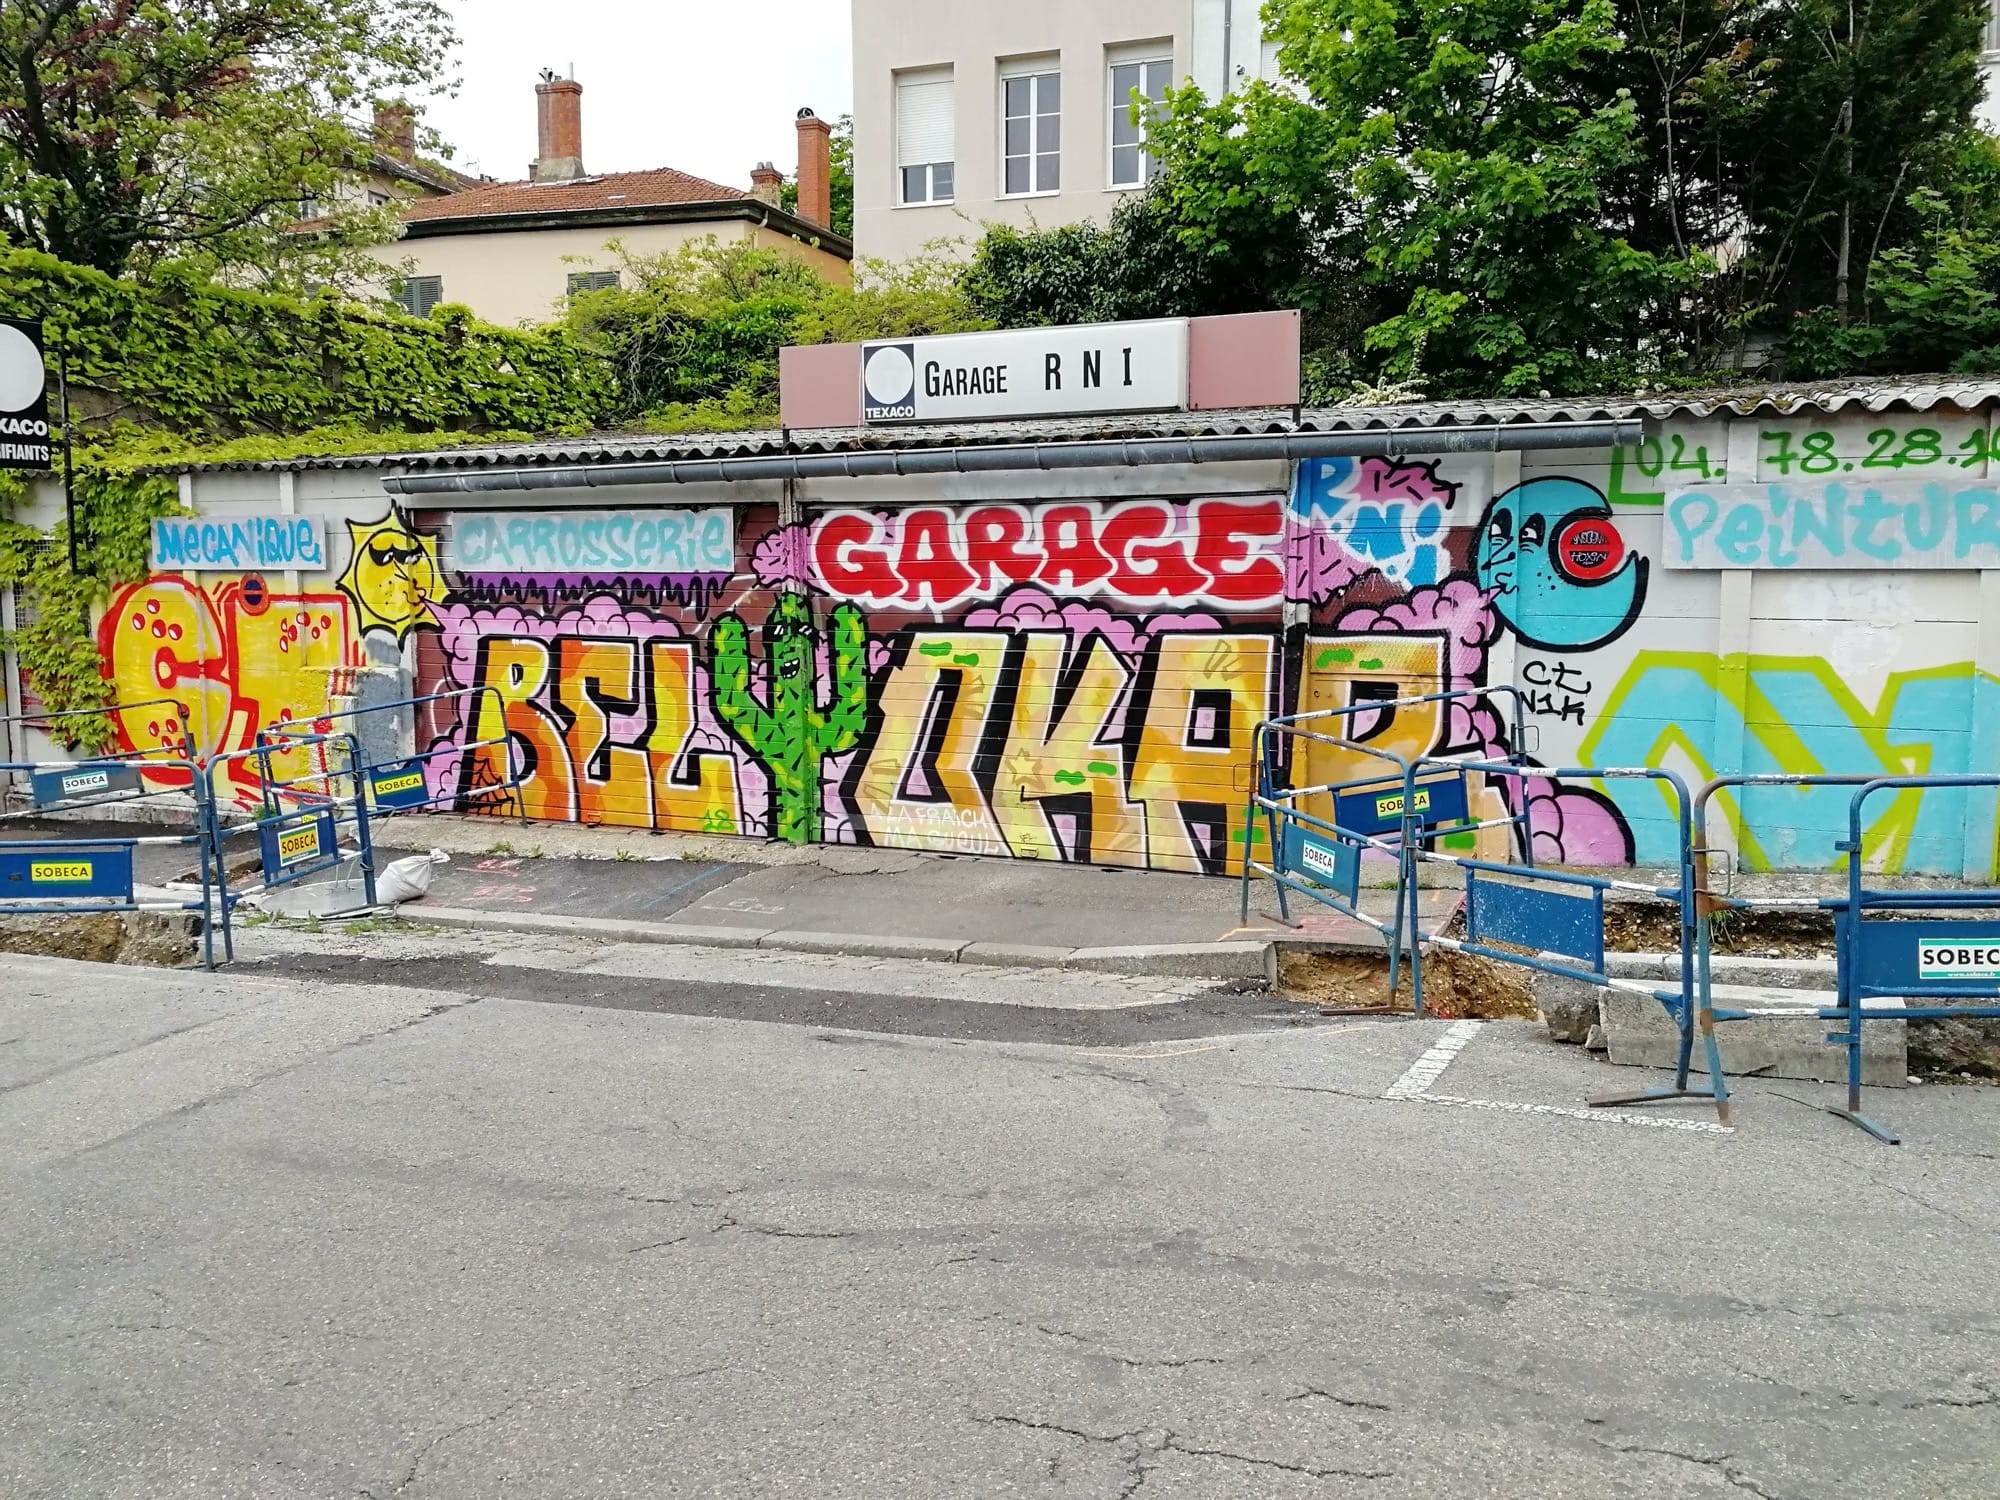 Graffiti 1588  captured by Rabot in Lyon France